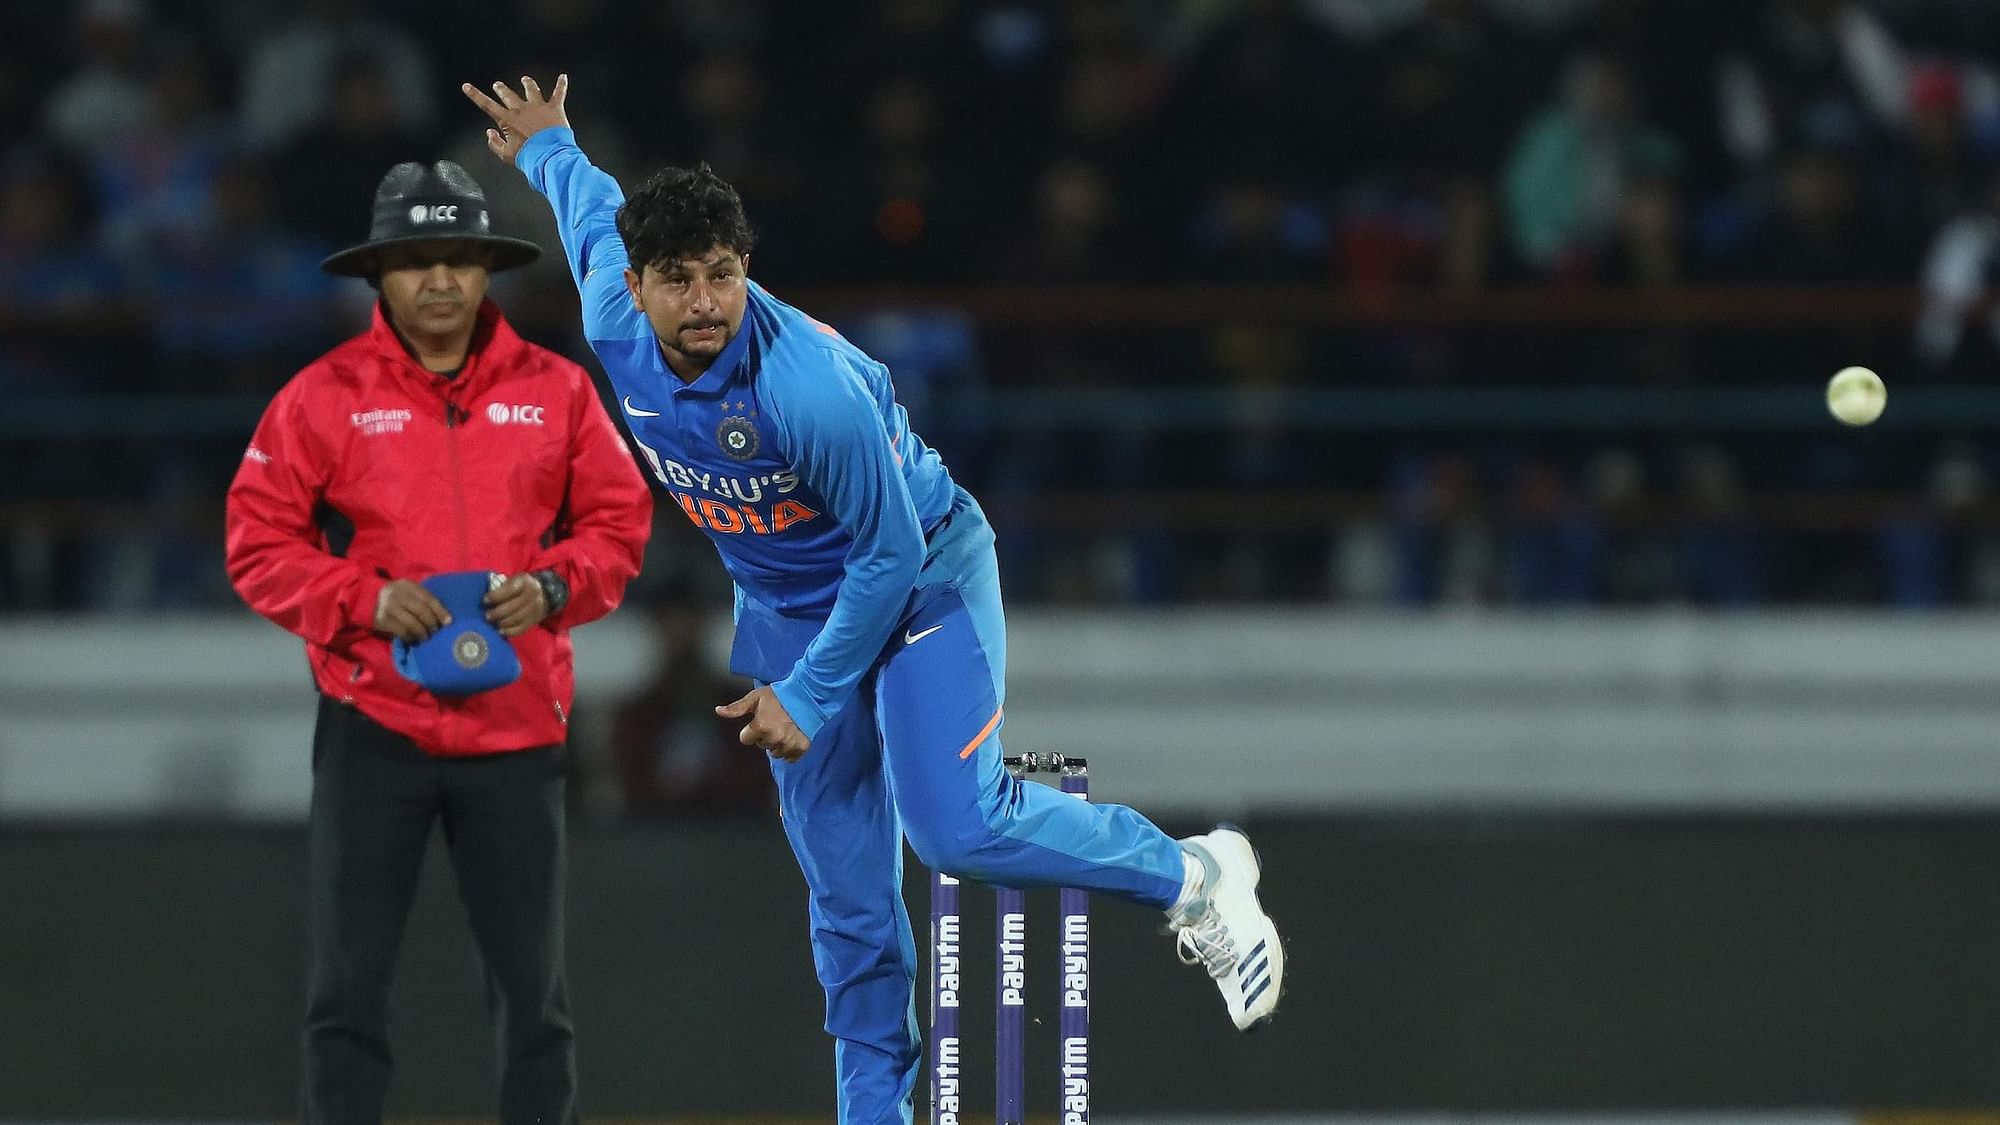 Kuldeep Yadav returned figures of 2/65 as India beat Australia by 36 runs in the 2nd ODI in Rajkot on Friday.